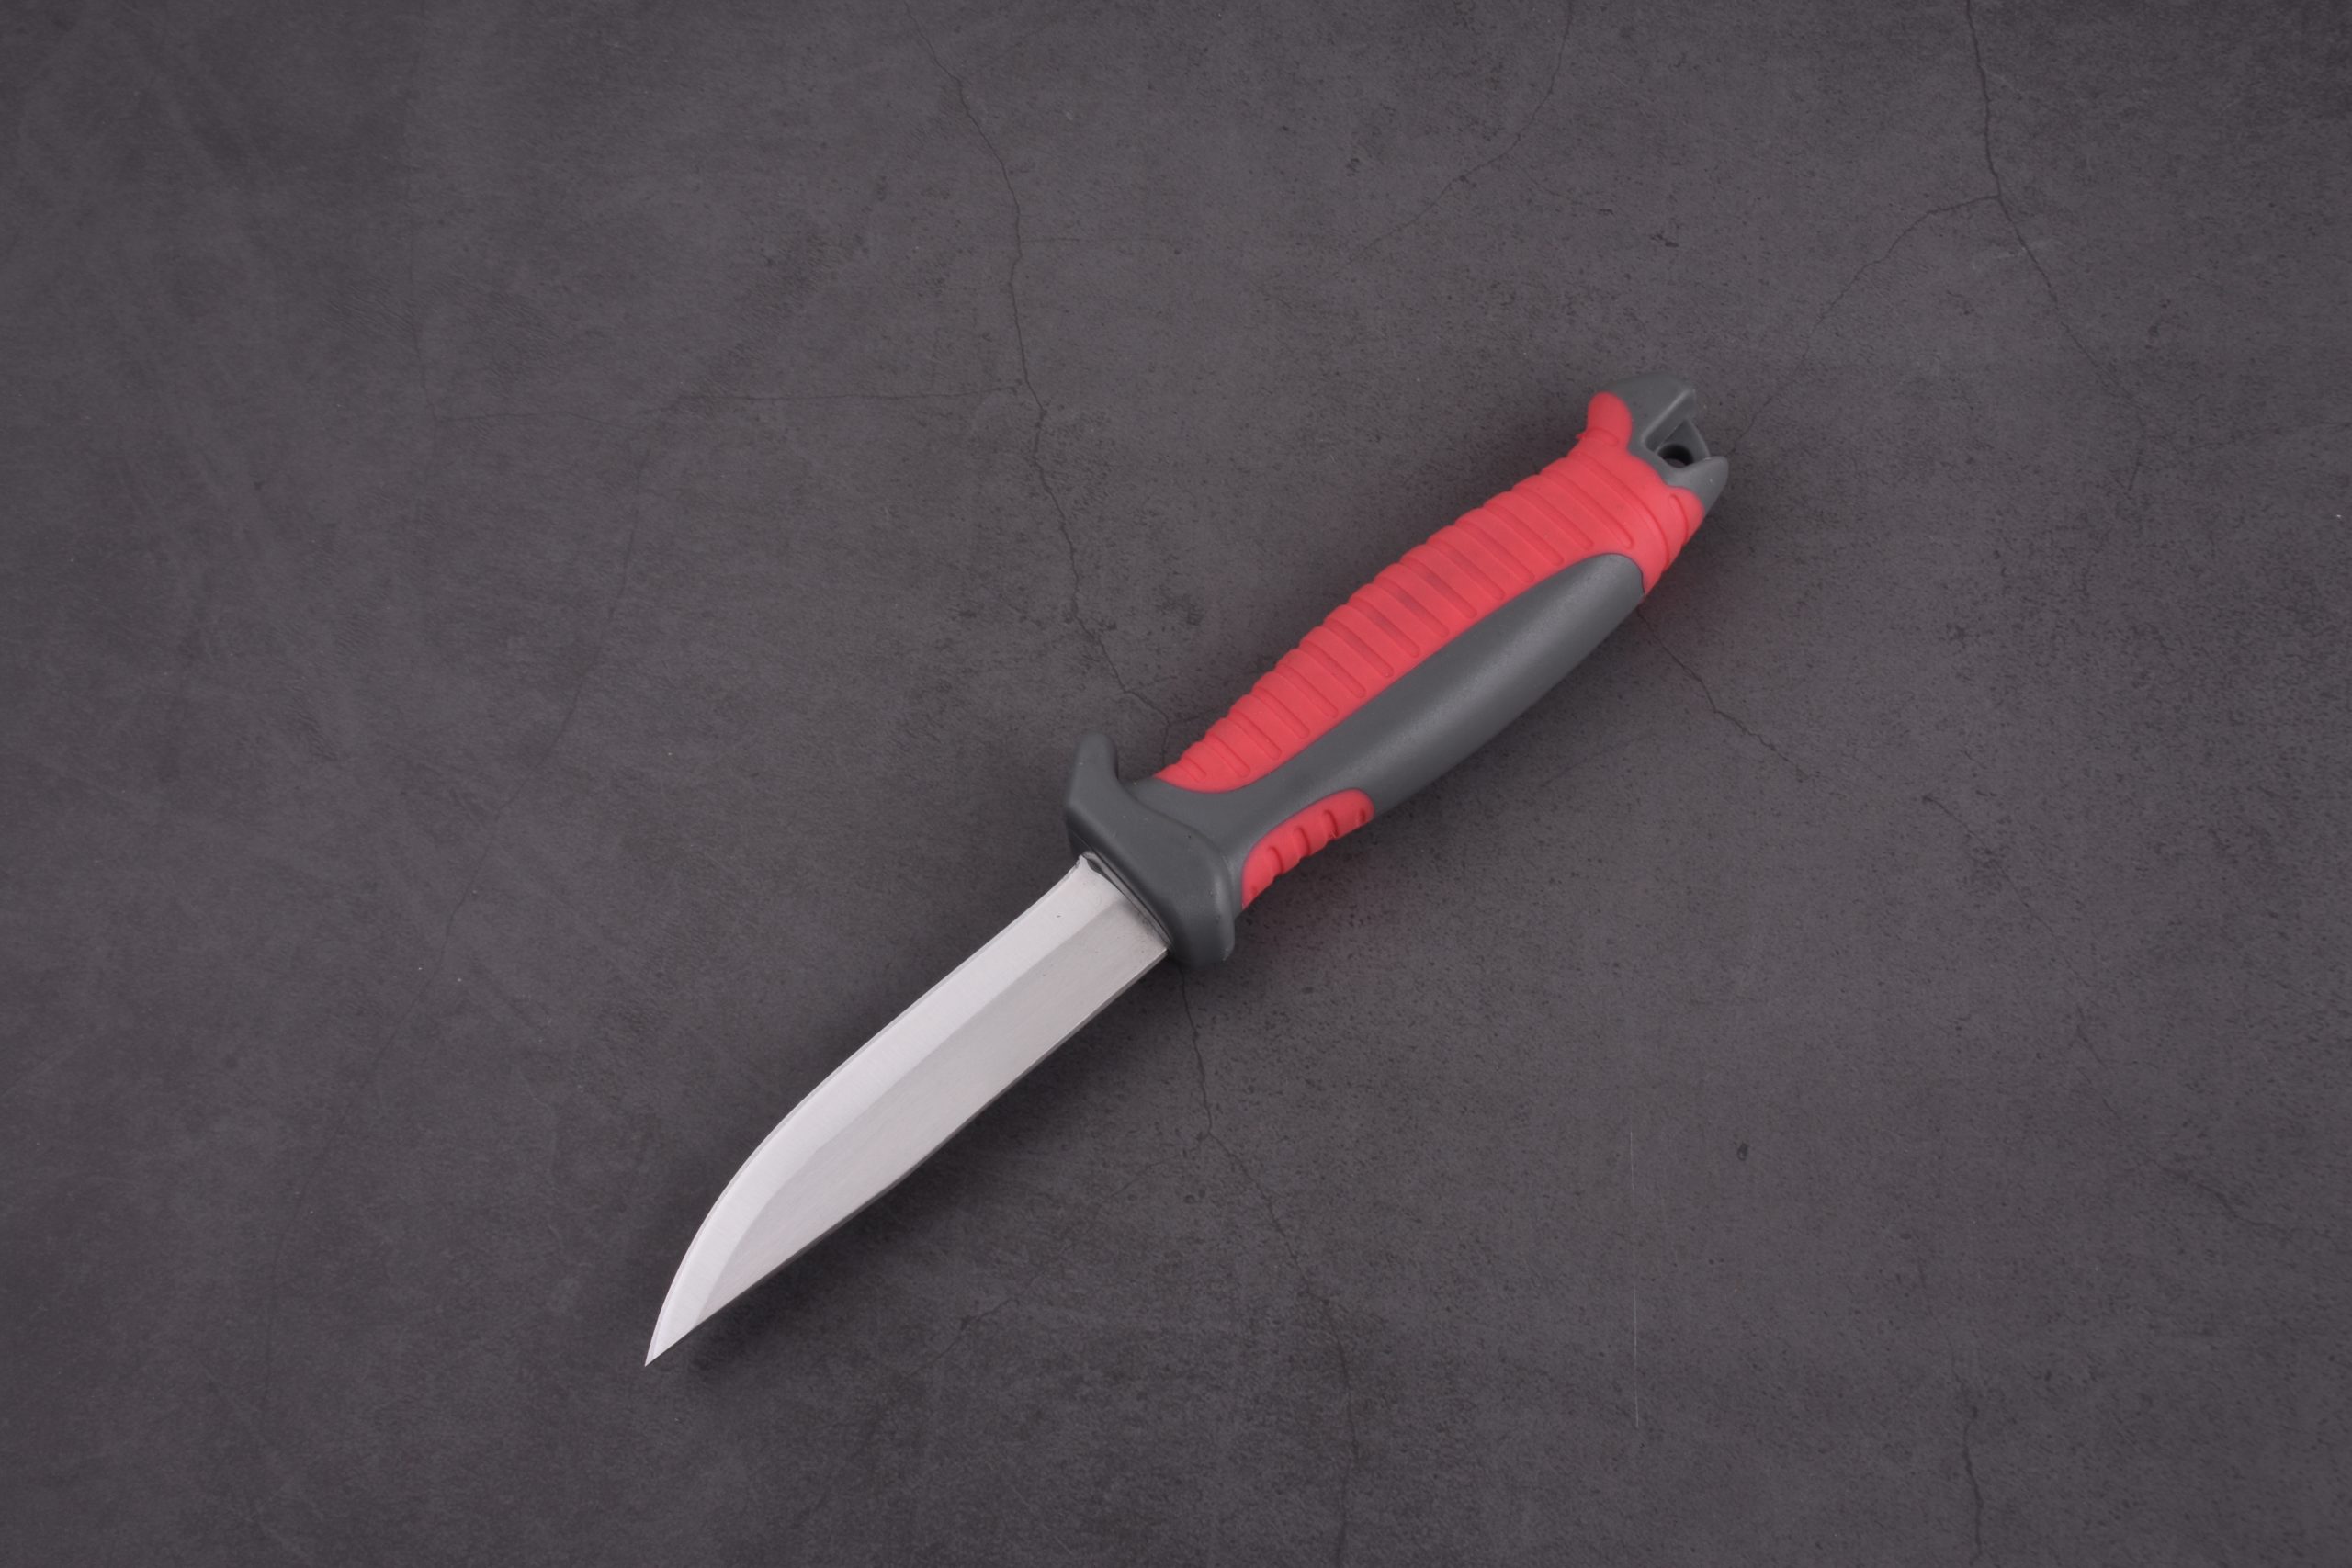 OEM Fixed Fishing Knife 3Cr13 Blade PP+TPR Handle na may PP sheath black & red FX-22654-04